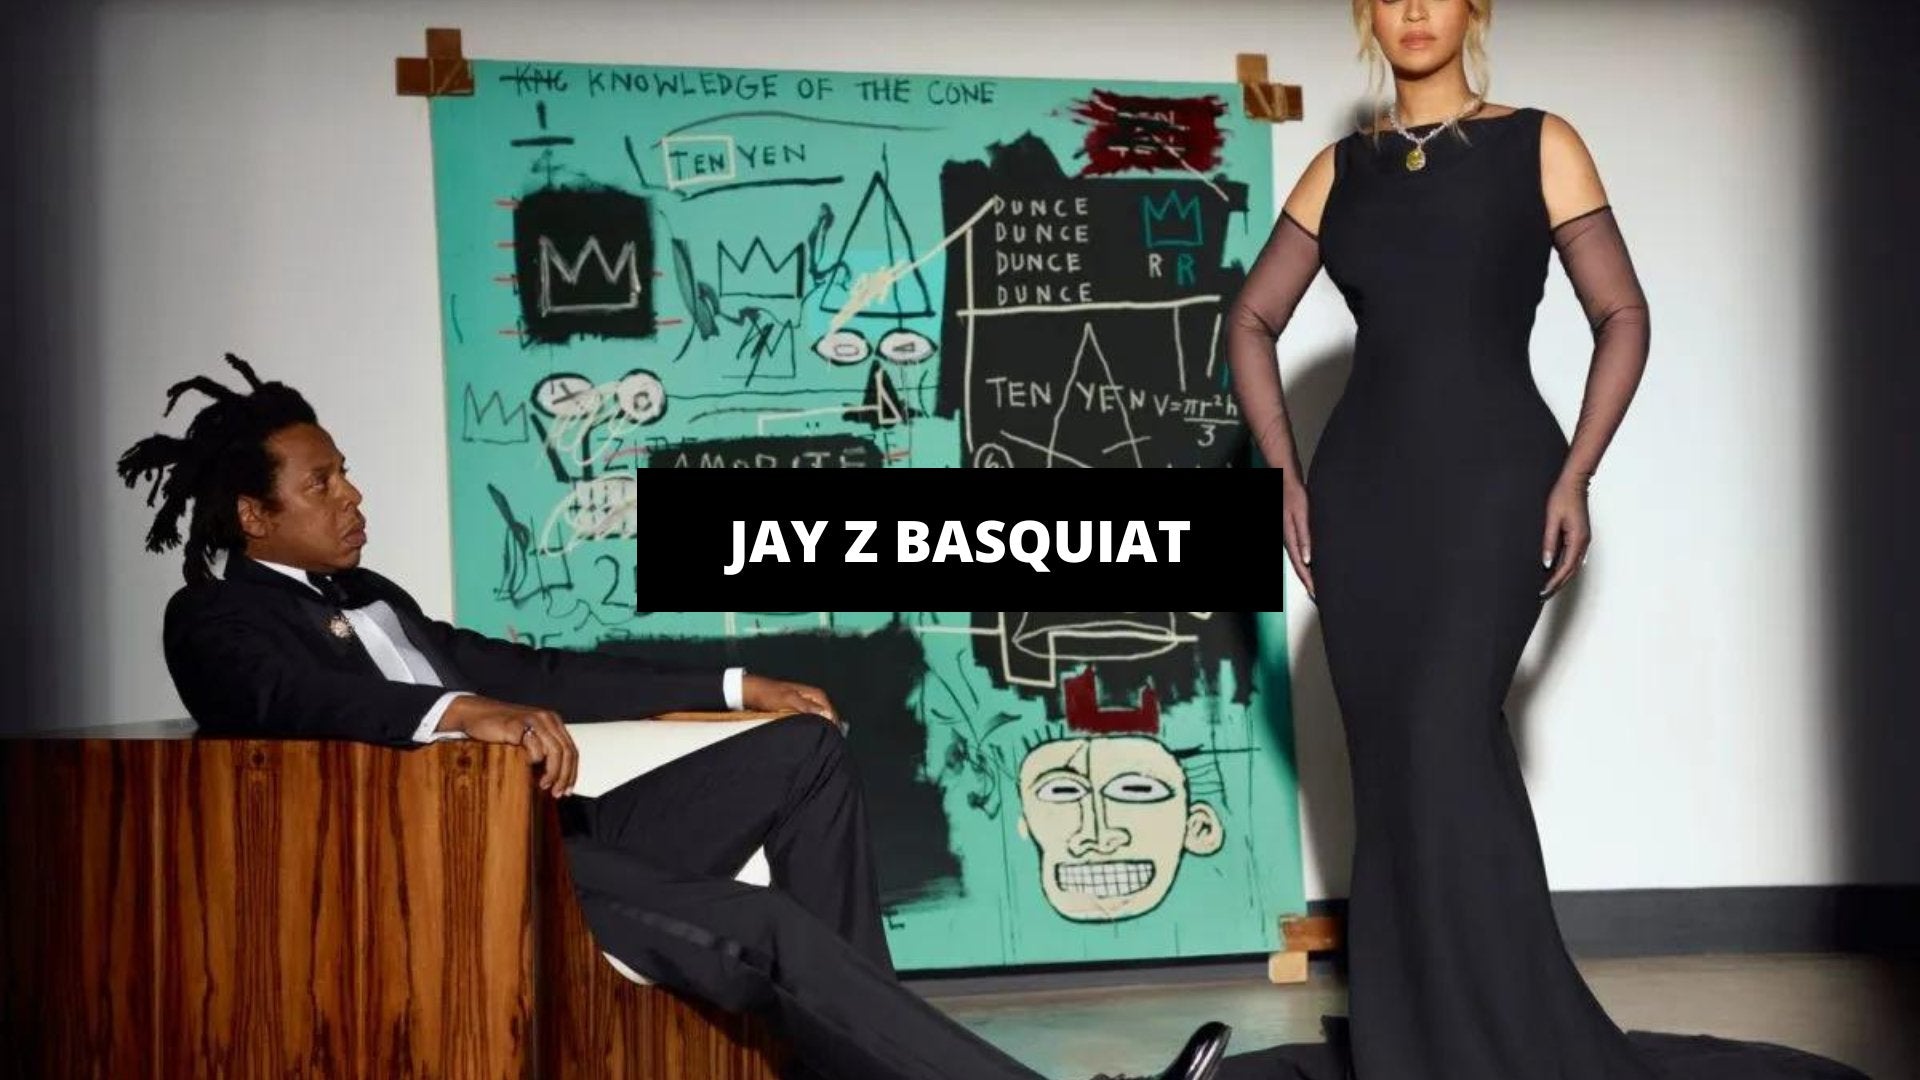 Jay Z Basquiat - The Trendy Art